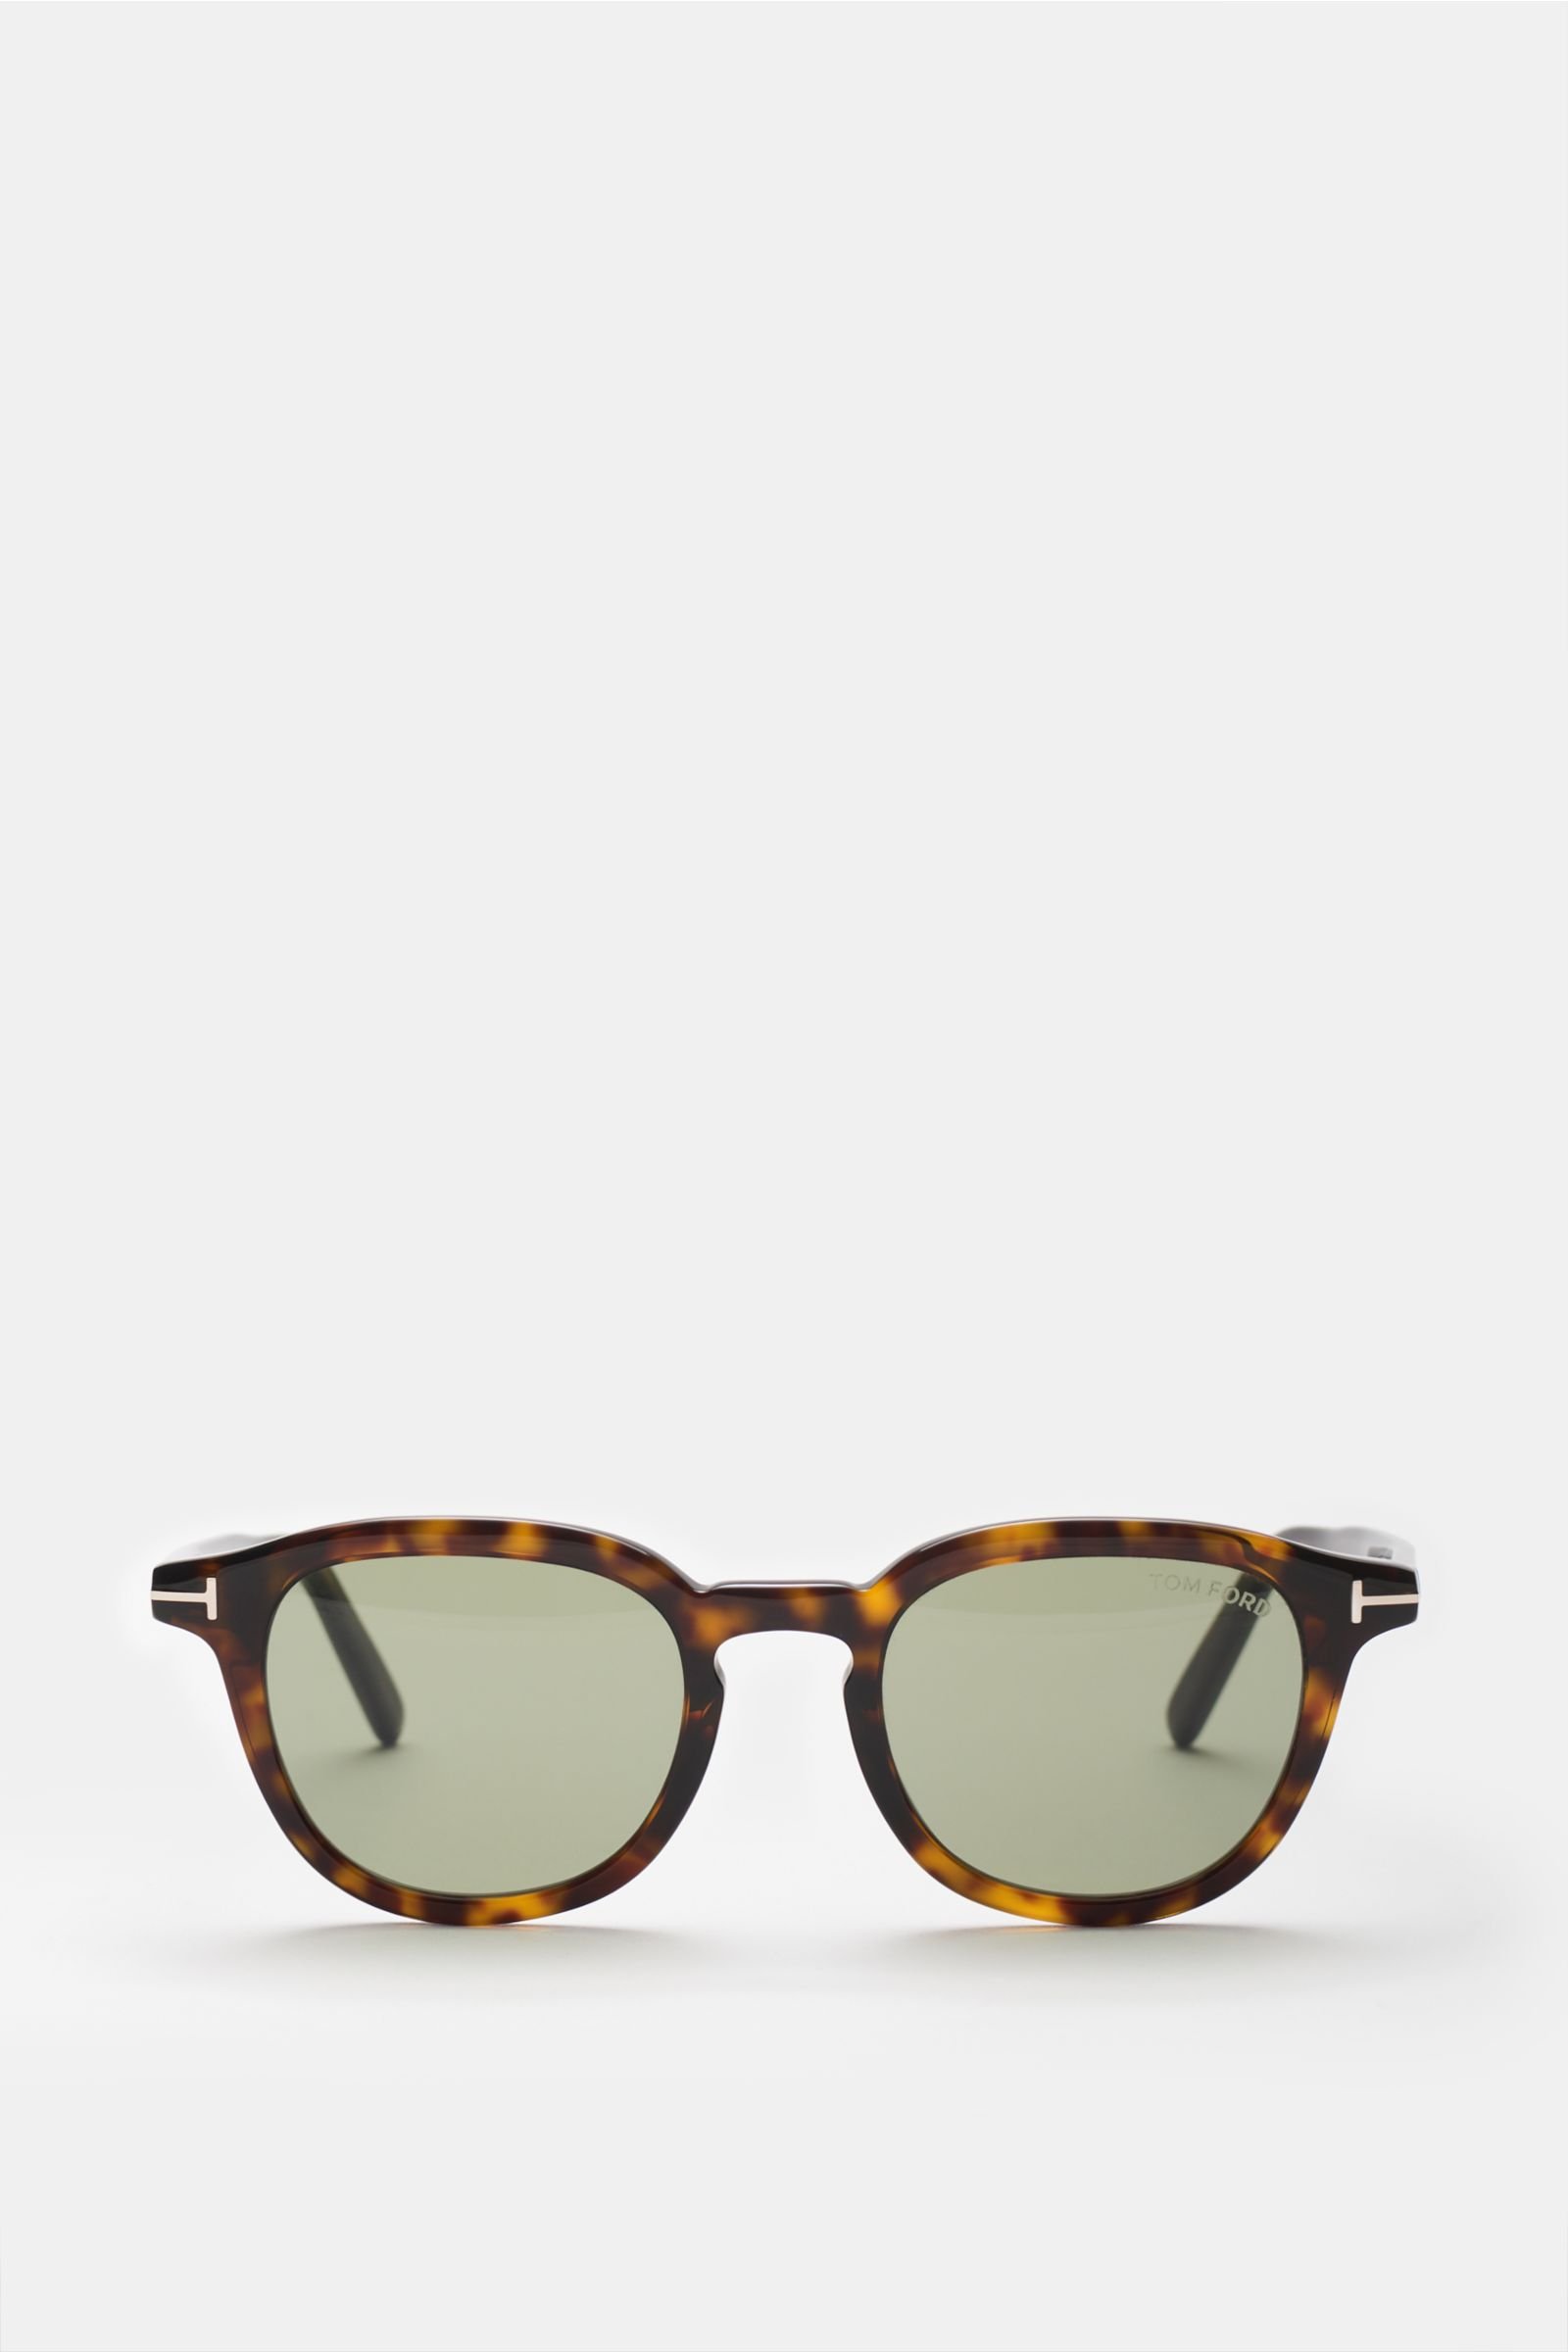 Sunglasses 'Pax' dark brown patterned/green 